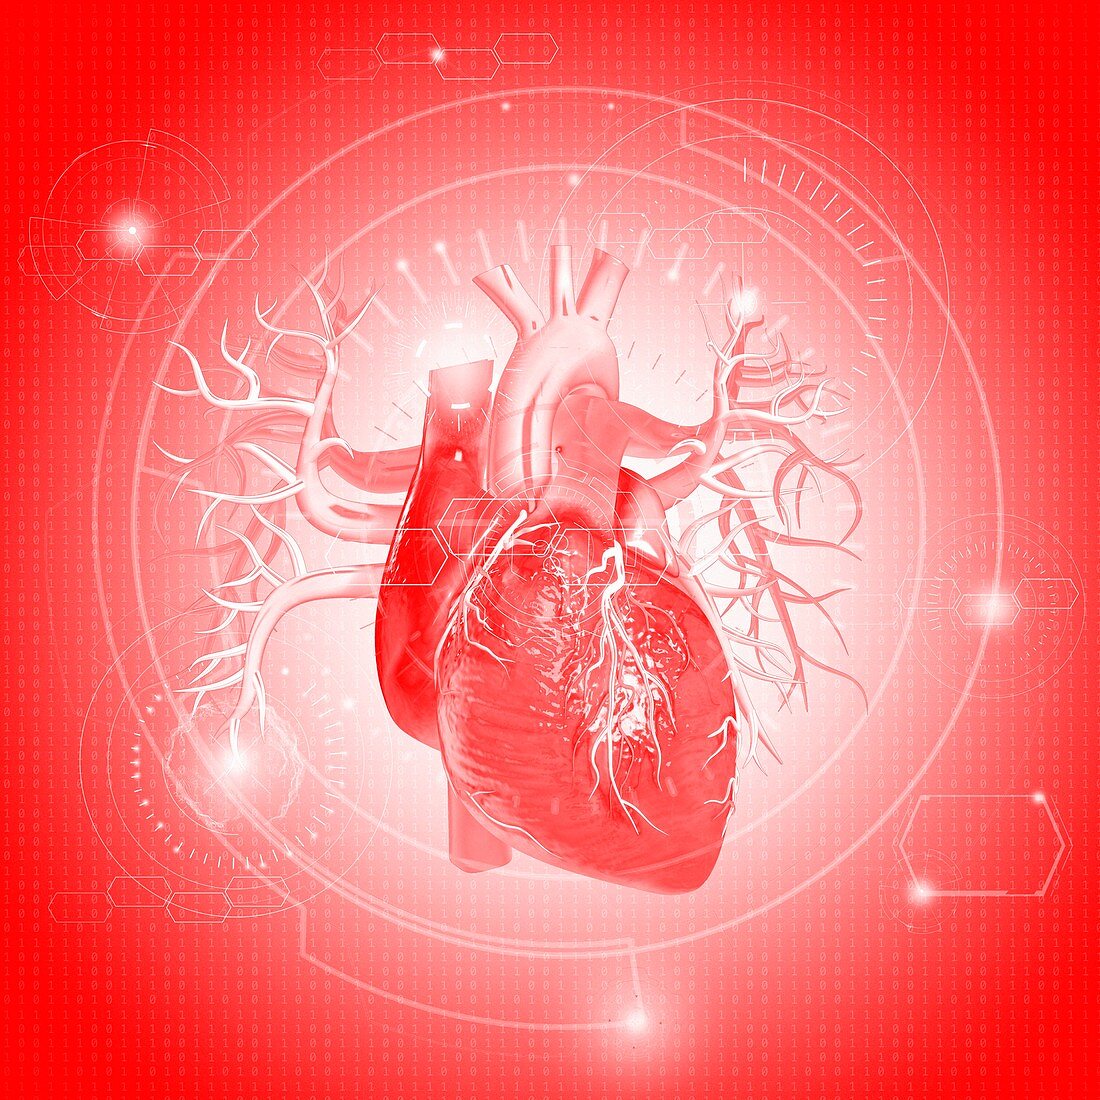 Heart against red background, illustration